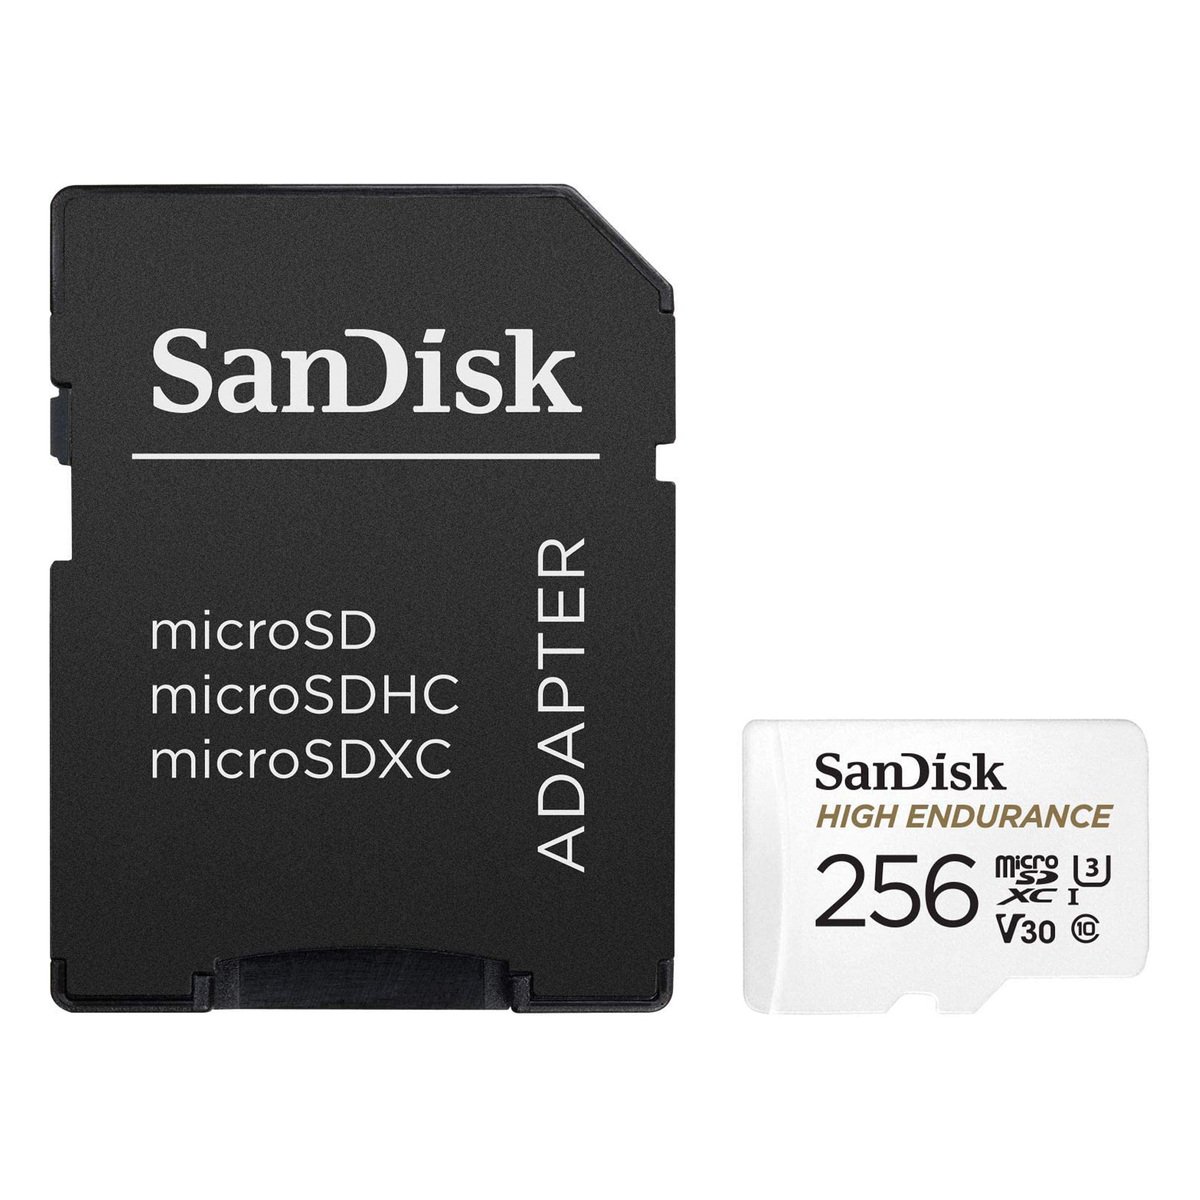 SanDisk High Endurance microSDHC Card 256GB for Dashcams & home